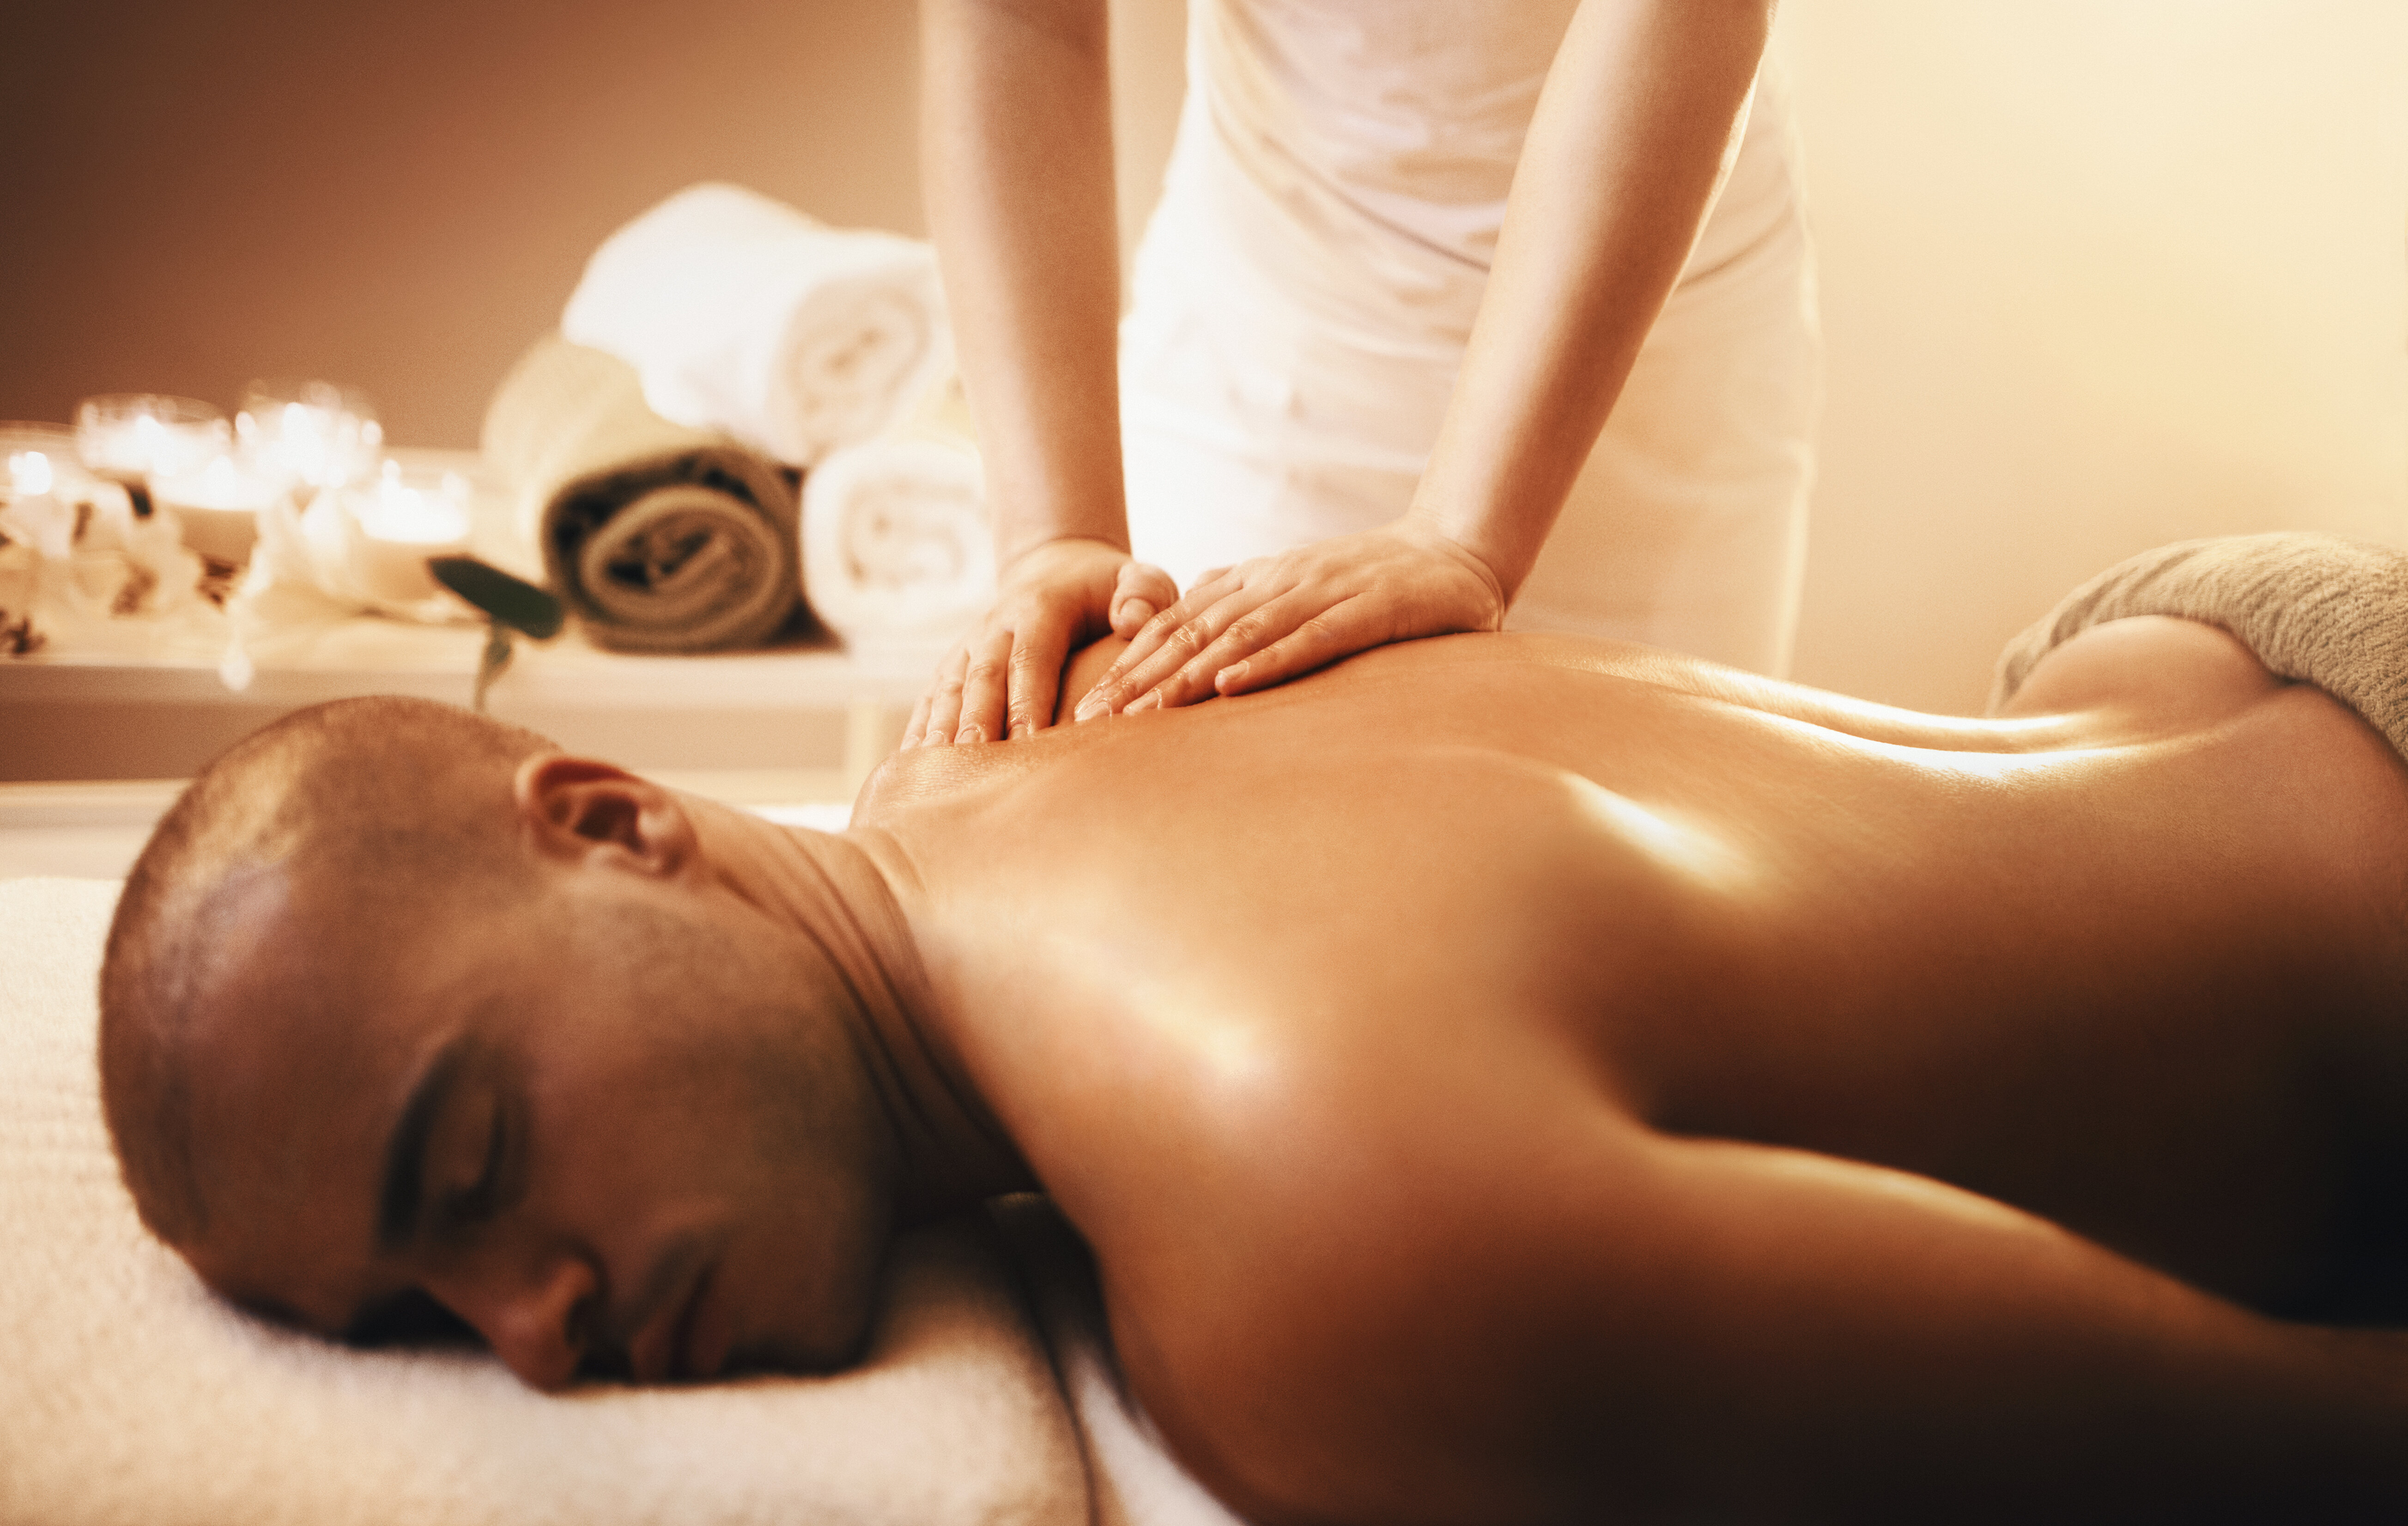 Alexis massage. Массаж релаксирующий для мужчин. Спа массаж для мужчин. Релакс массаж для мужчин. Массаж картинки.